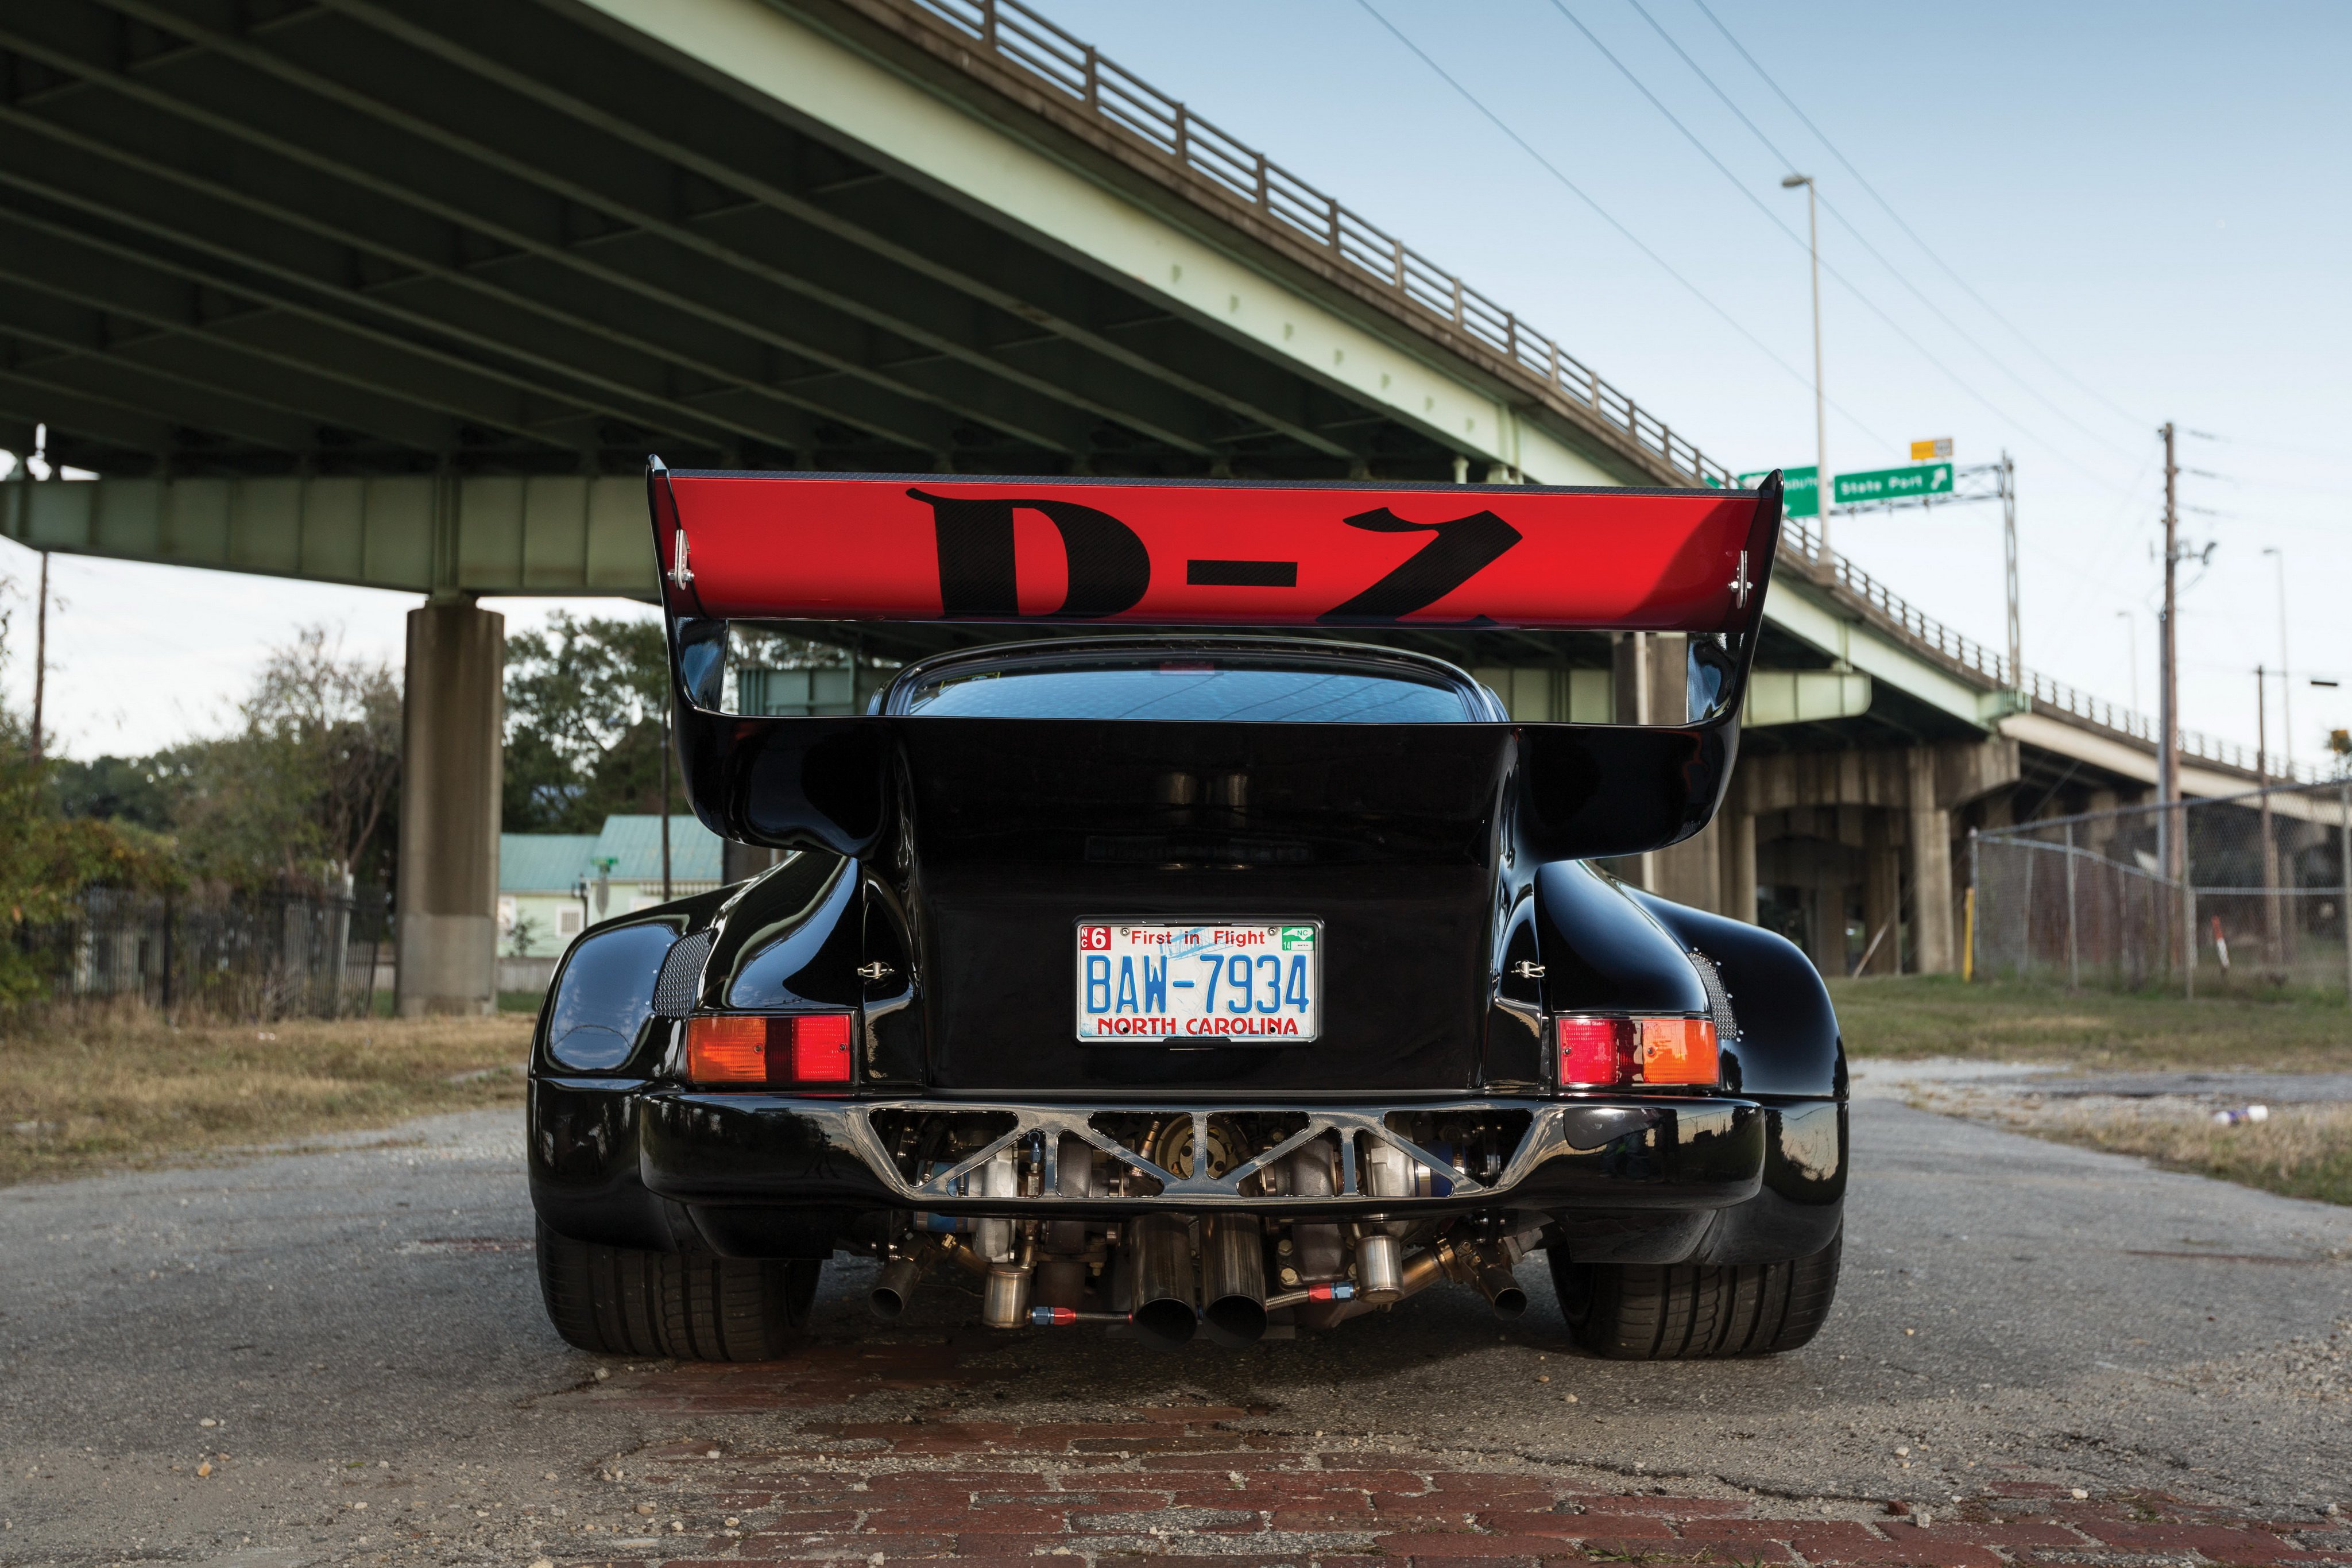 d zug, Turbo, Rsr, Porsche, 930, 2014, Cars, Black, Tuning Wallpaper